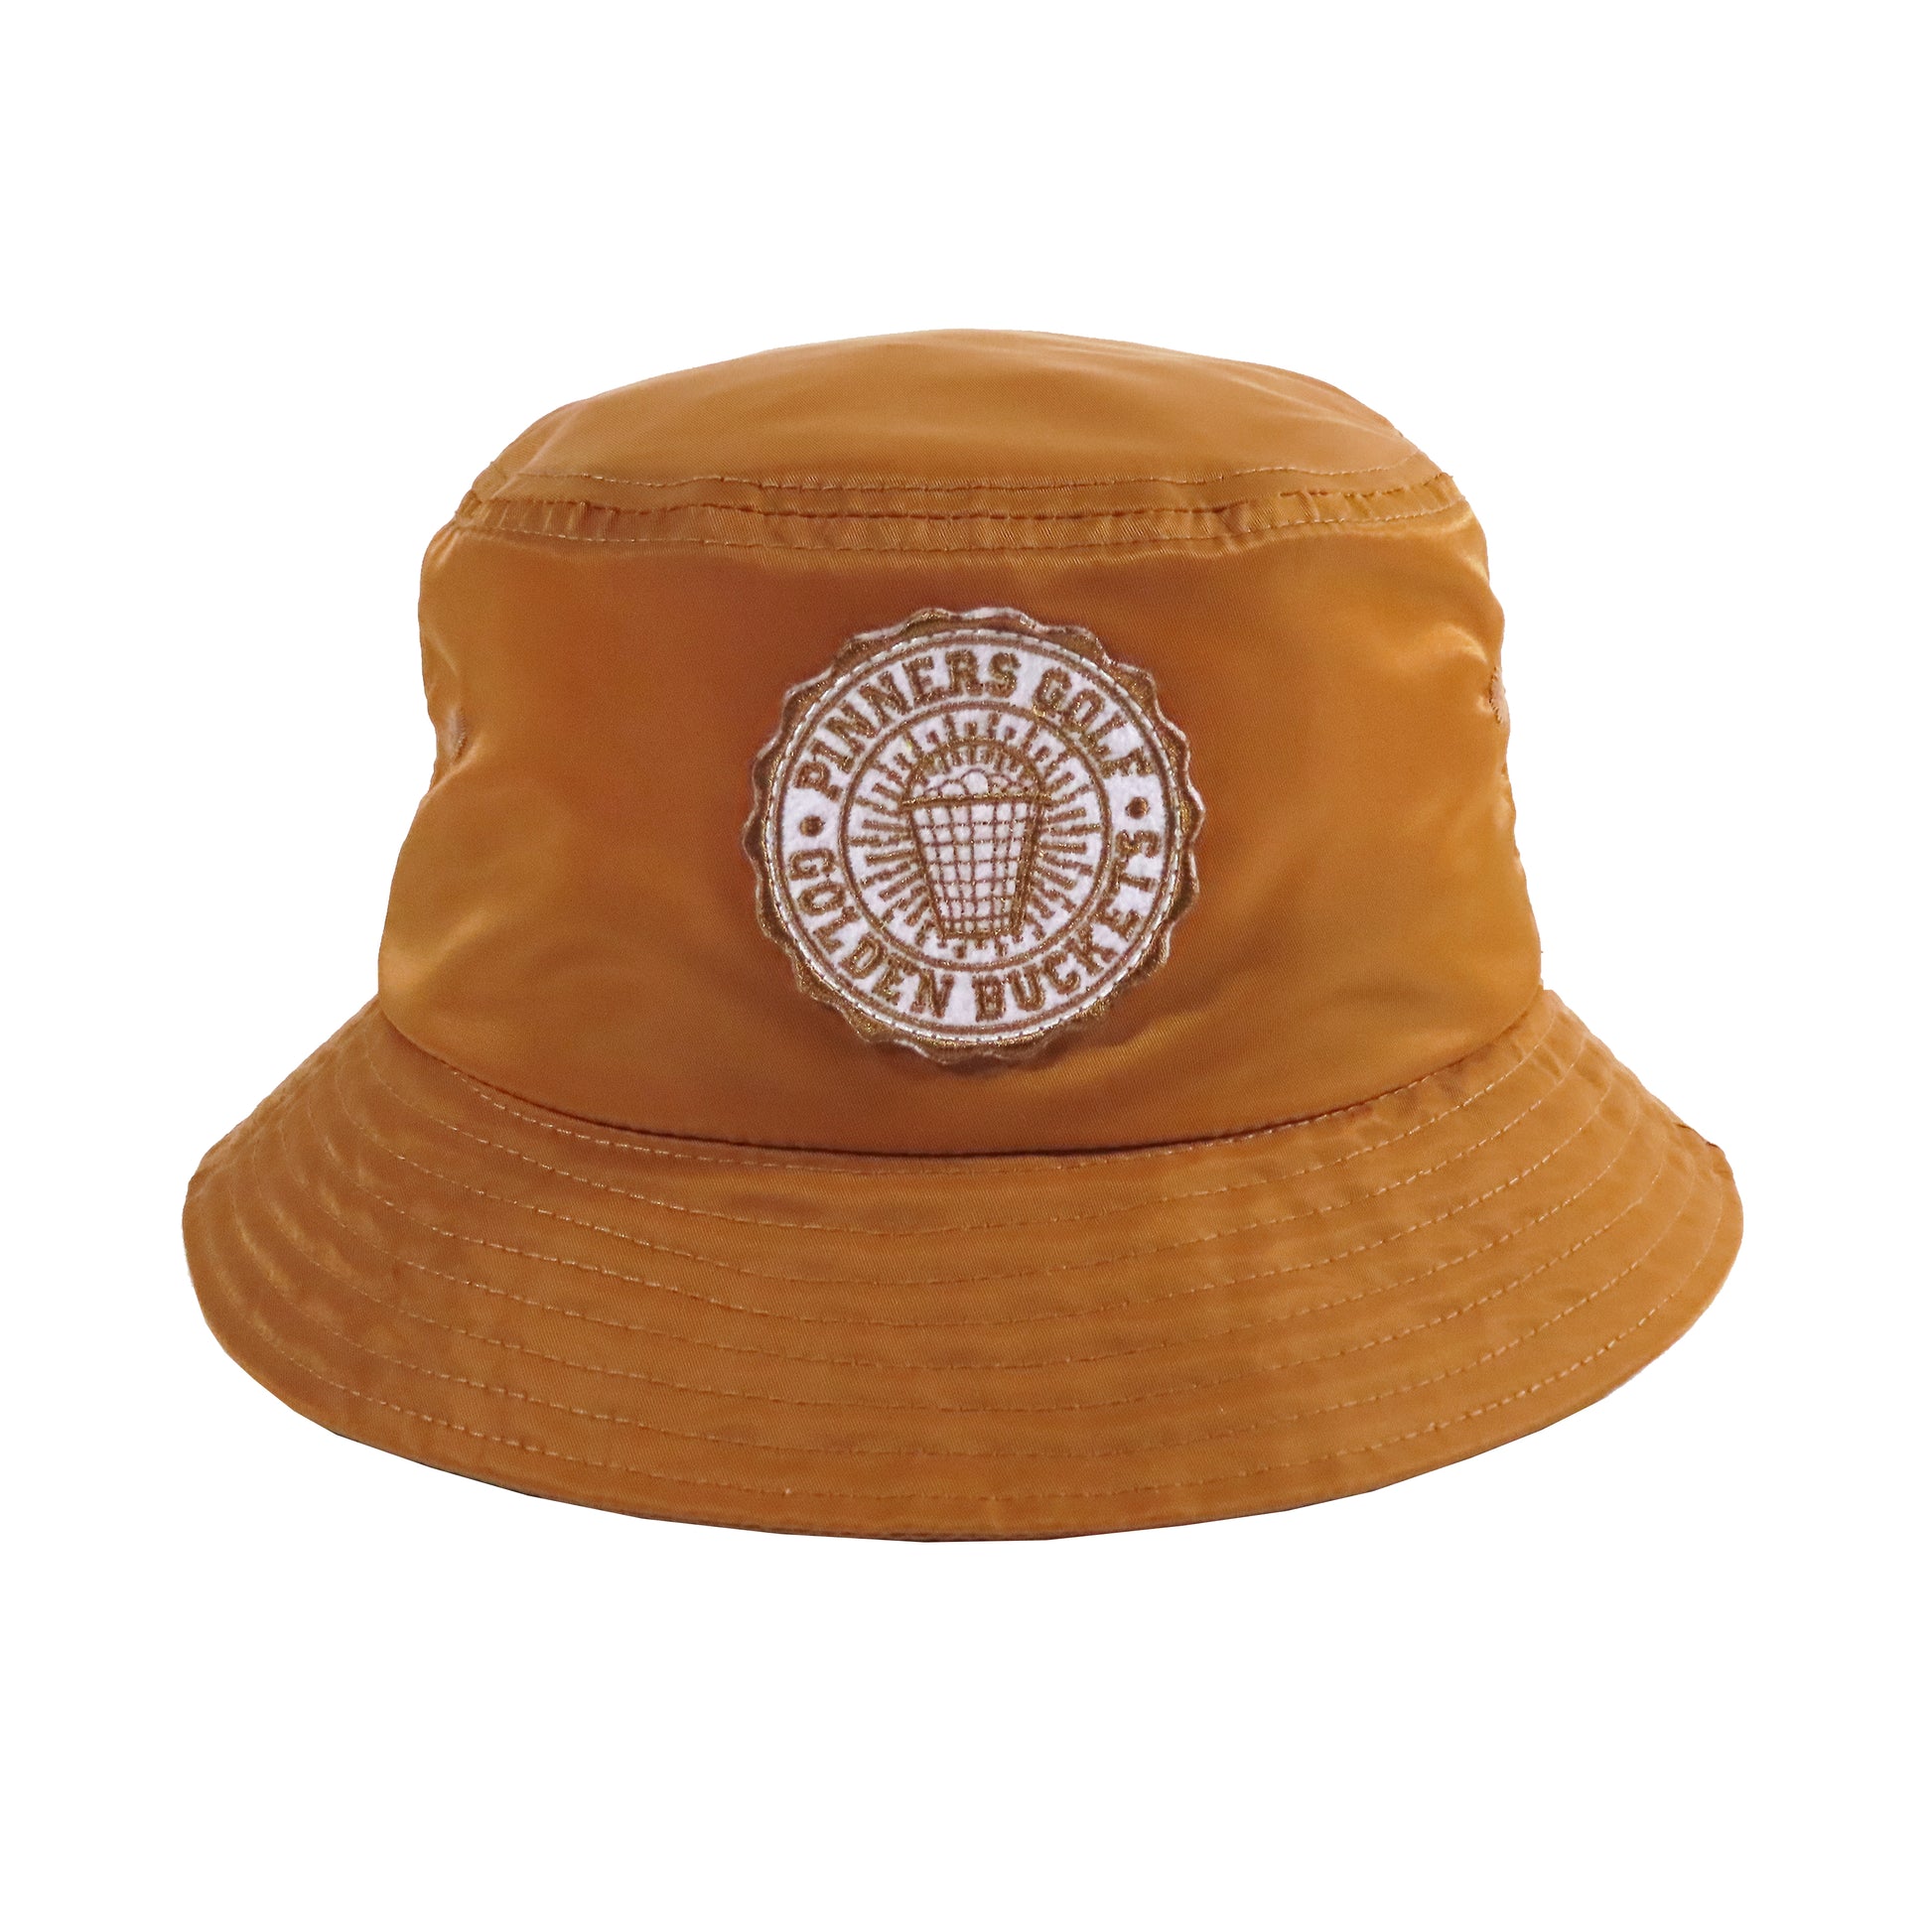 Pinner's Golf - Golden Buckets Badge Nylon Bucket Hat (Pinner's Gold)